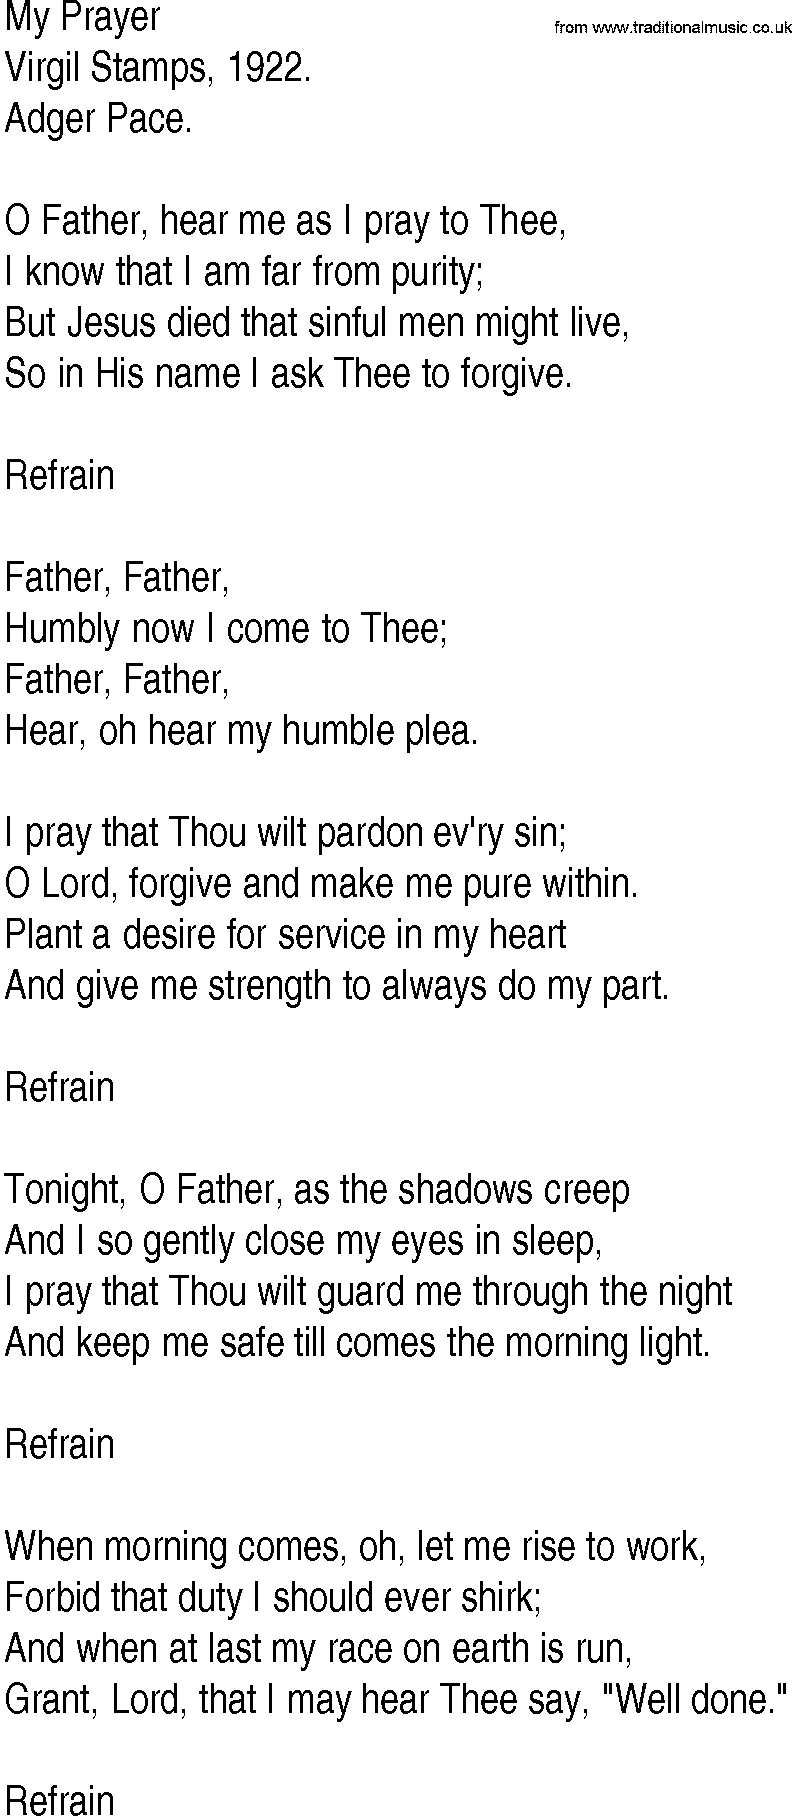 Hymn and Gospel Song: My Prayer by Virgil Stamps lyrics